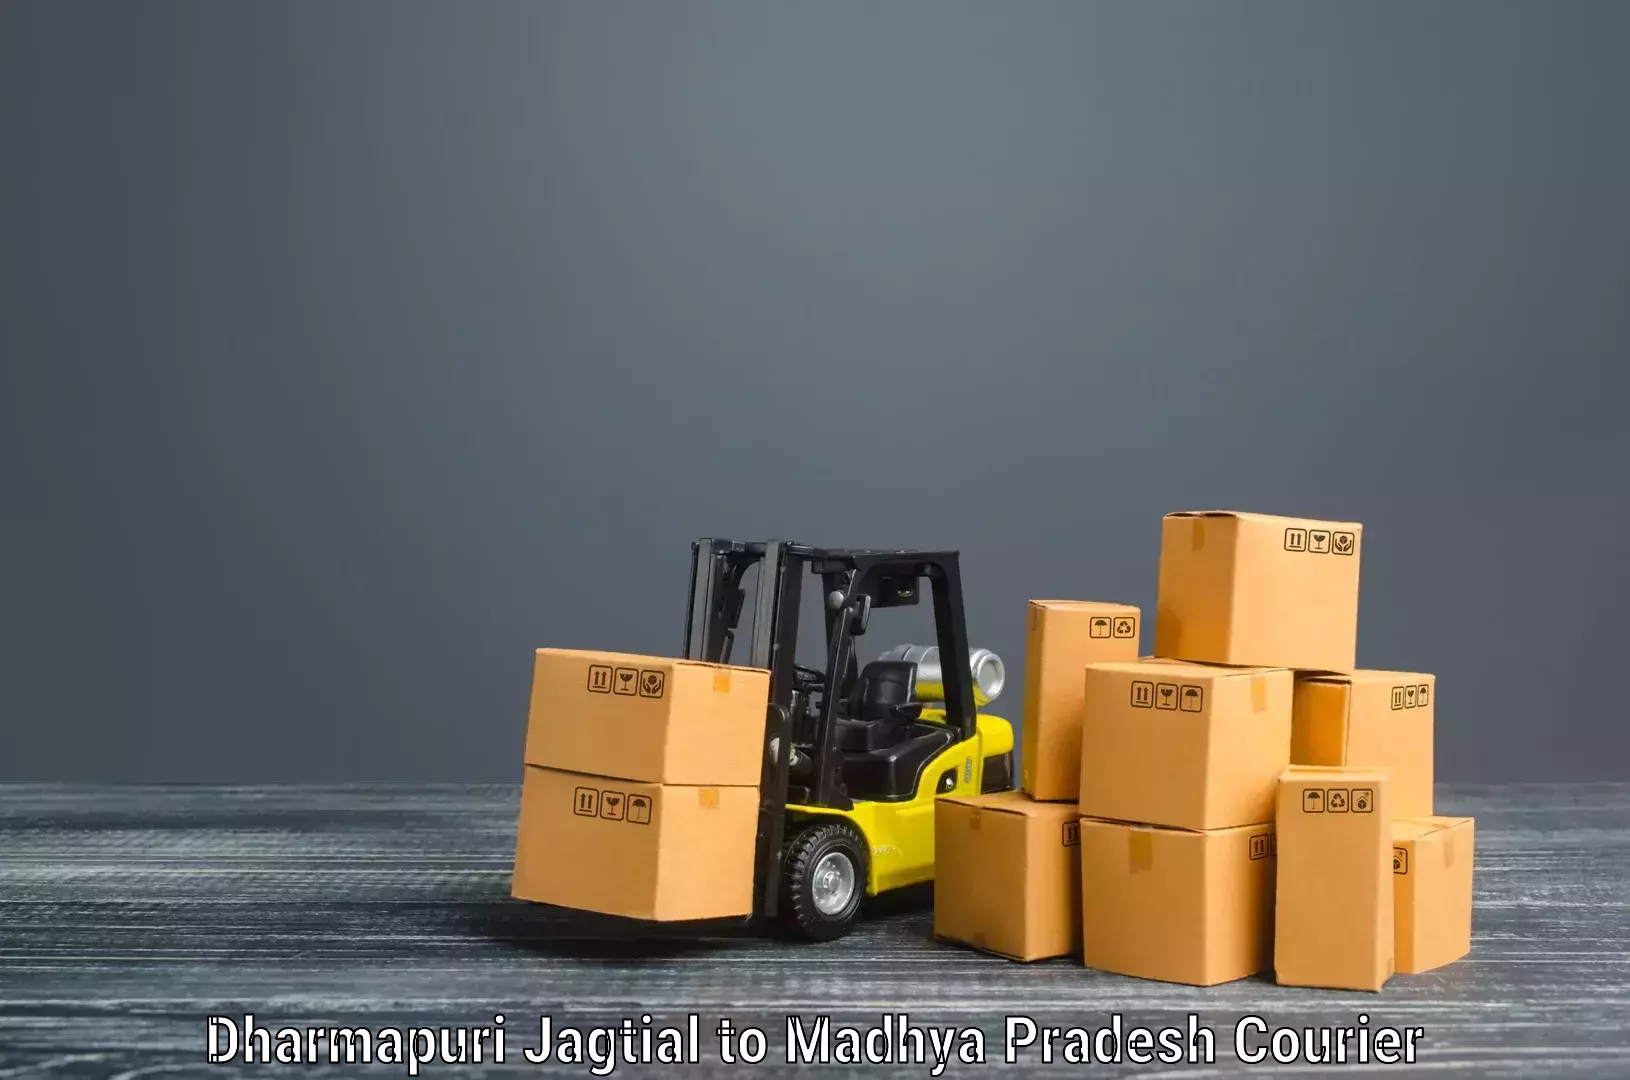 Quality moving and storage Dharmapuri Jagtial to Bajag